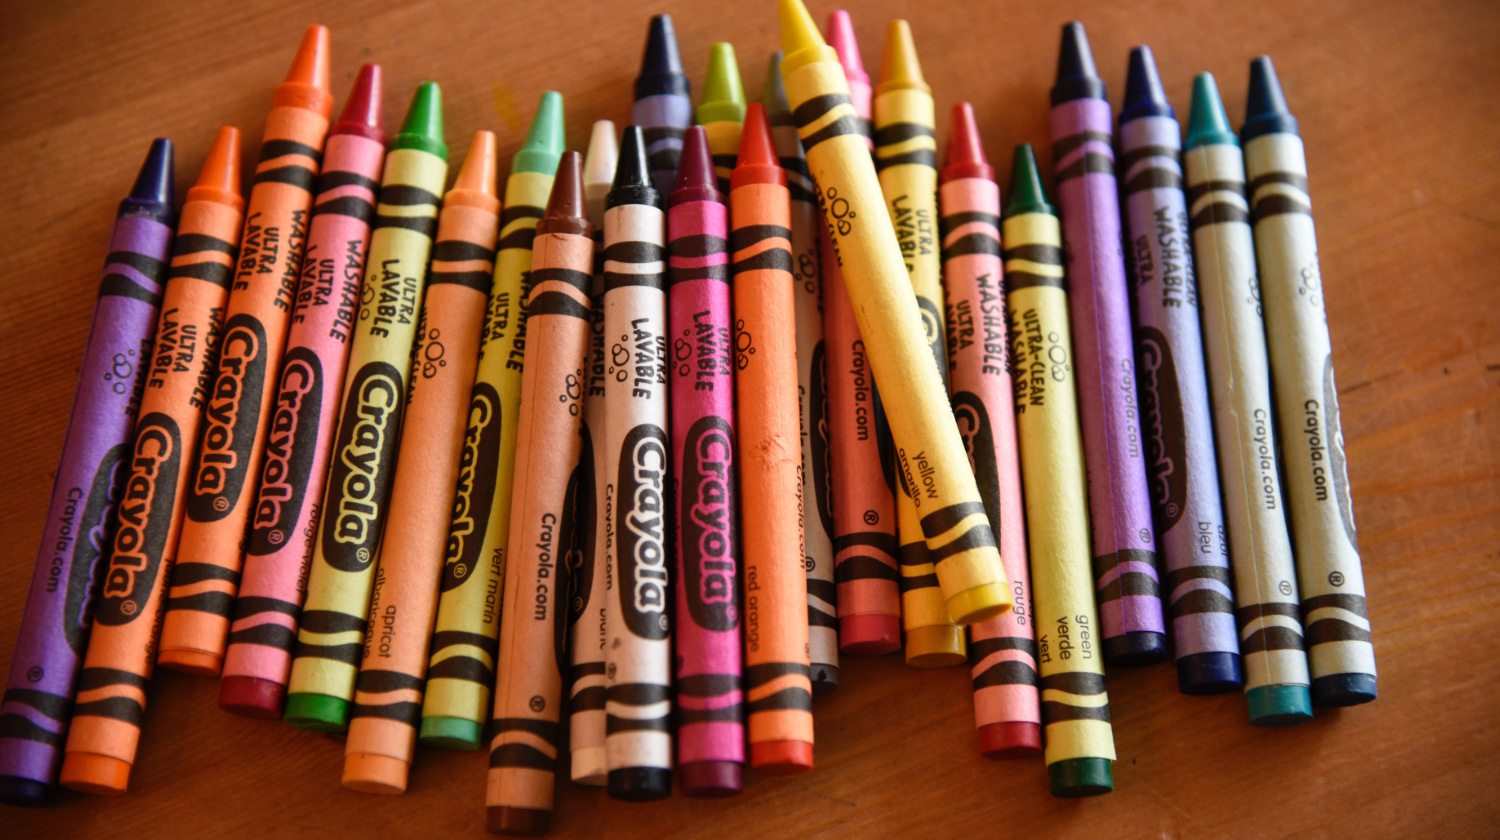 Crayola Washable Crayons